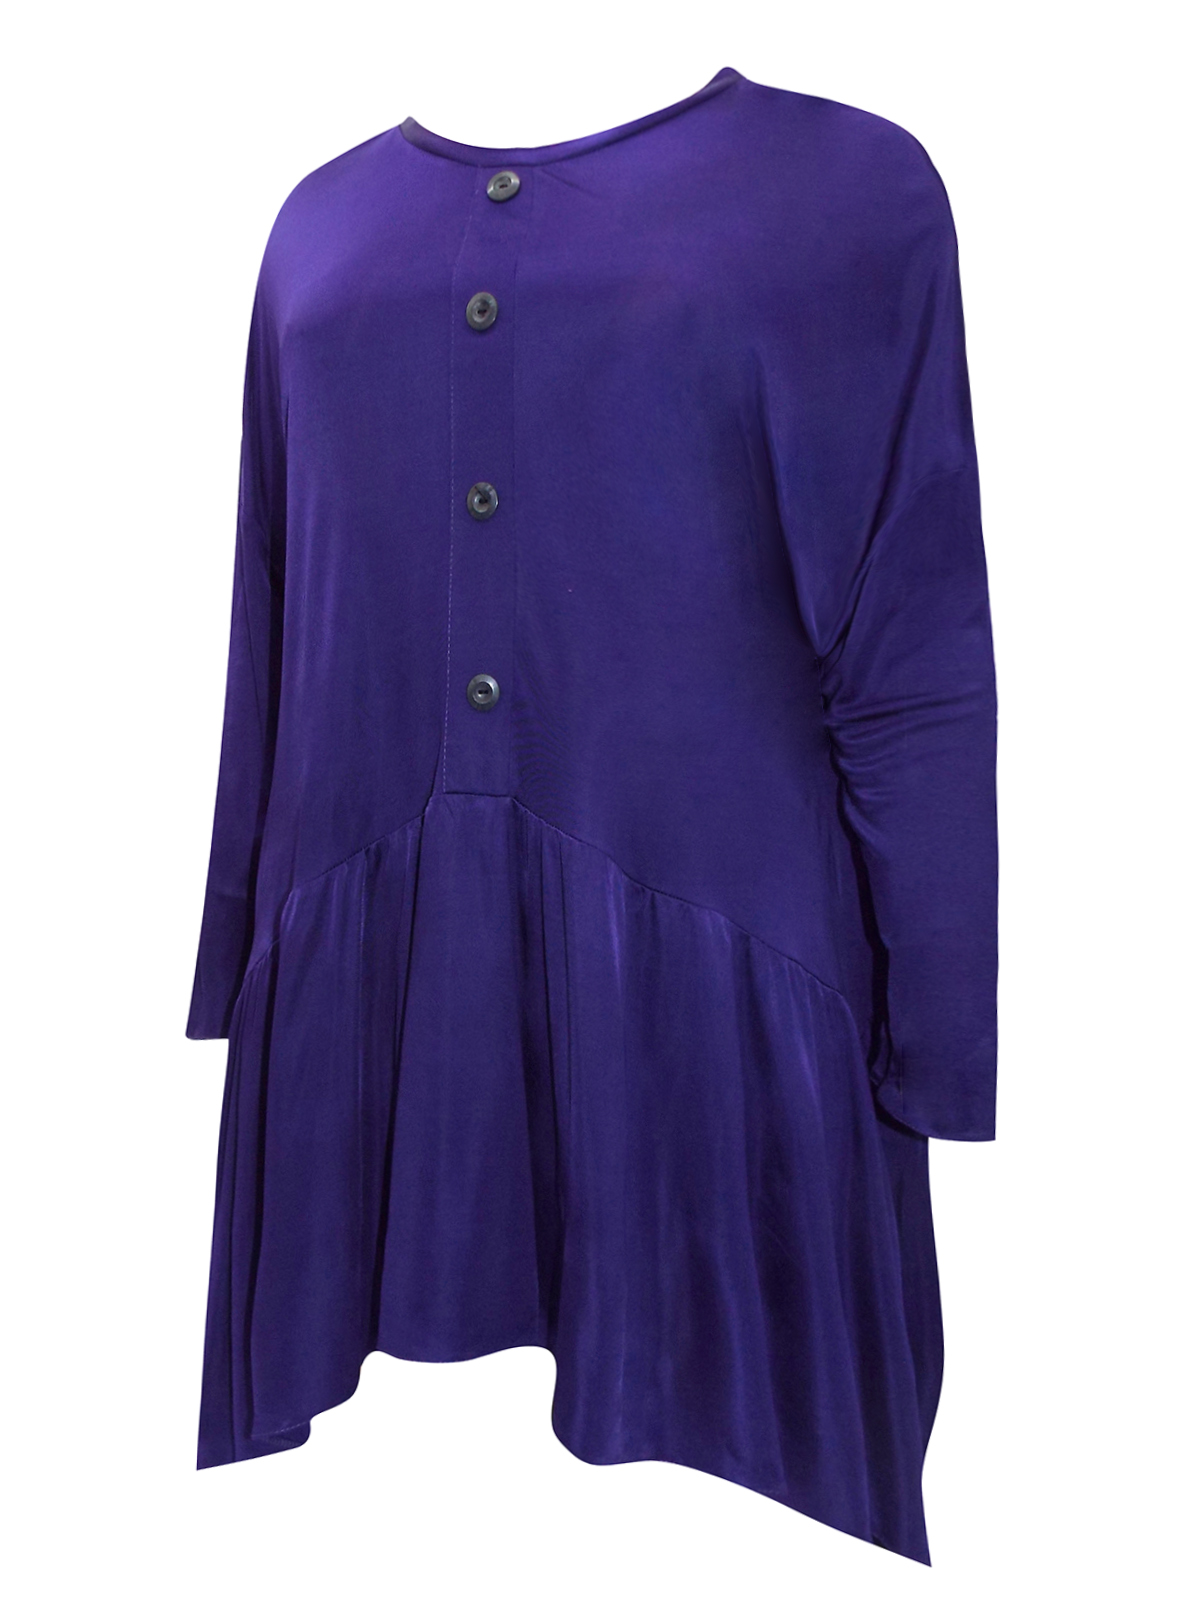 PURPLE Slinky Knit Shirred Drop Sides Tunic - Plus Size 16 to 30/32